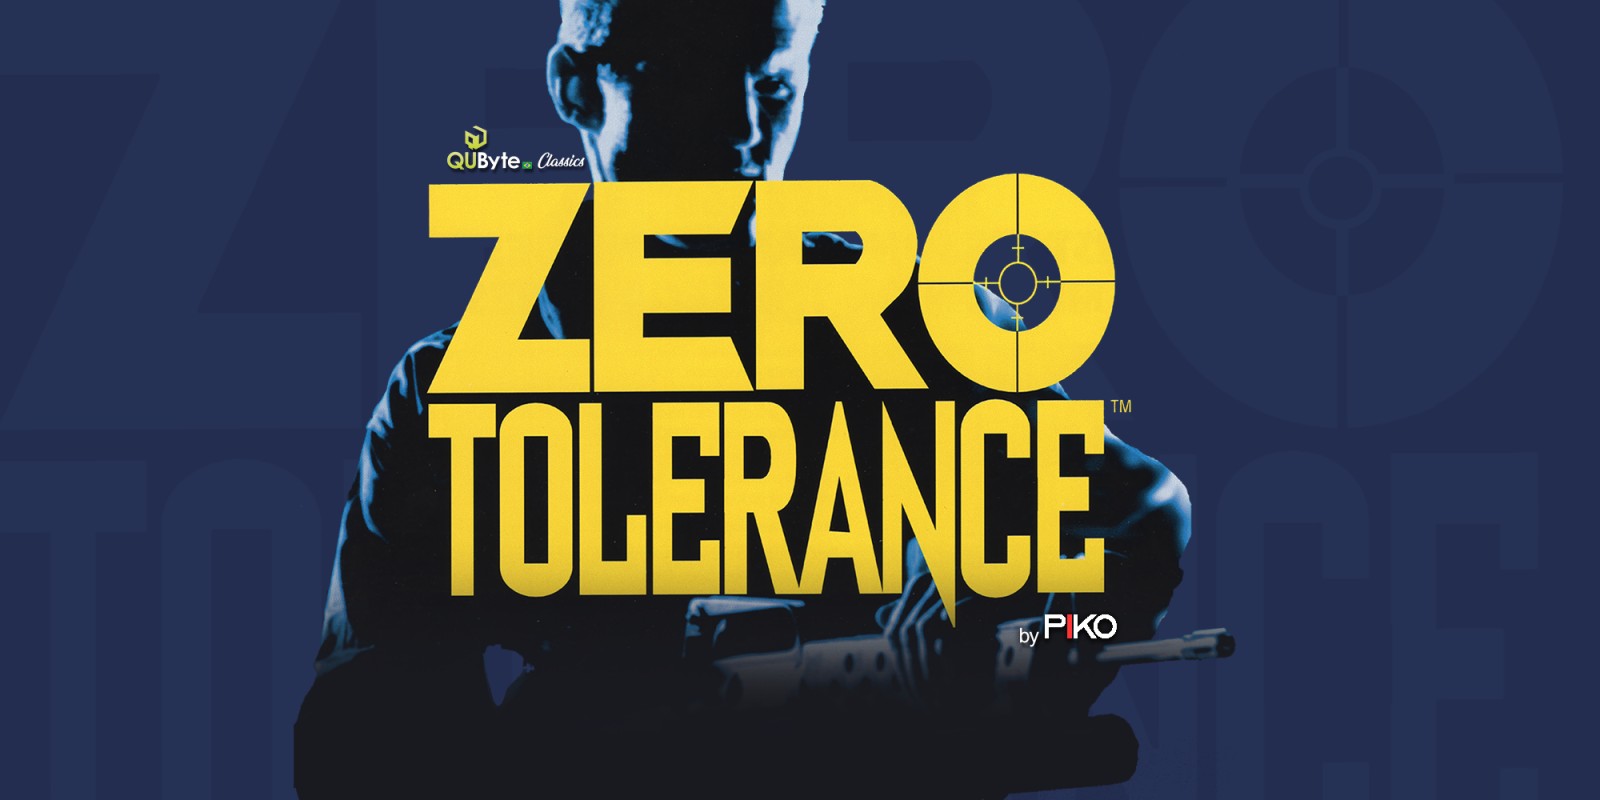 QUByte Classics: Zero Tolerance Collection by PIKO